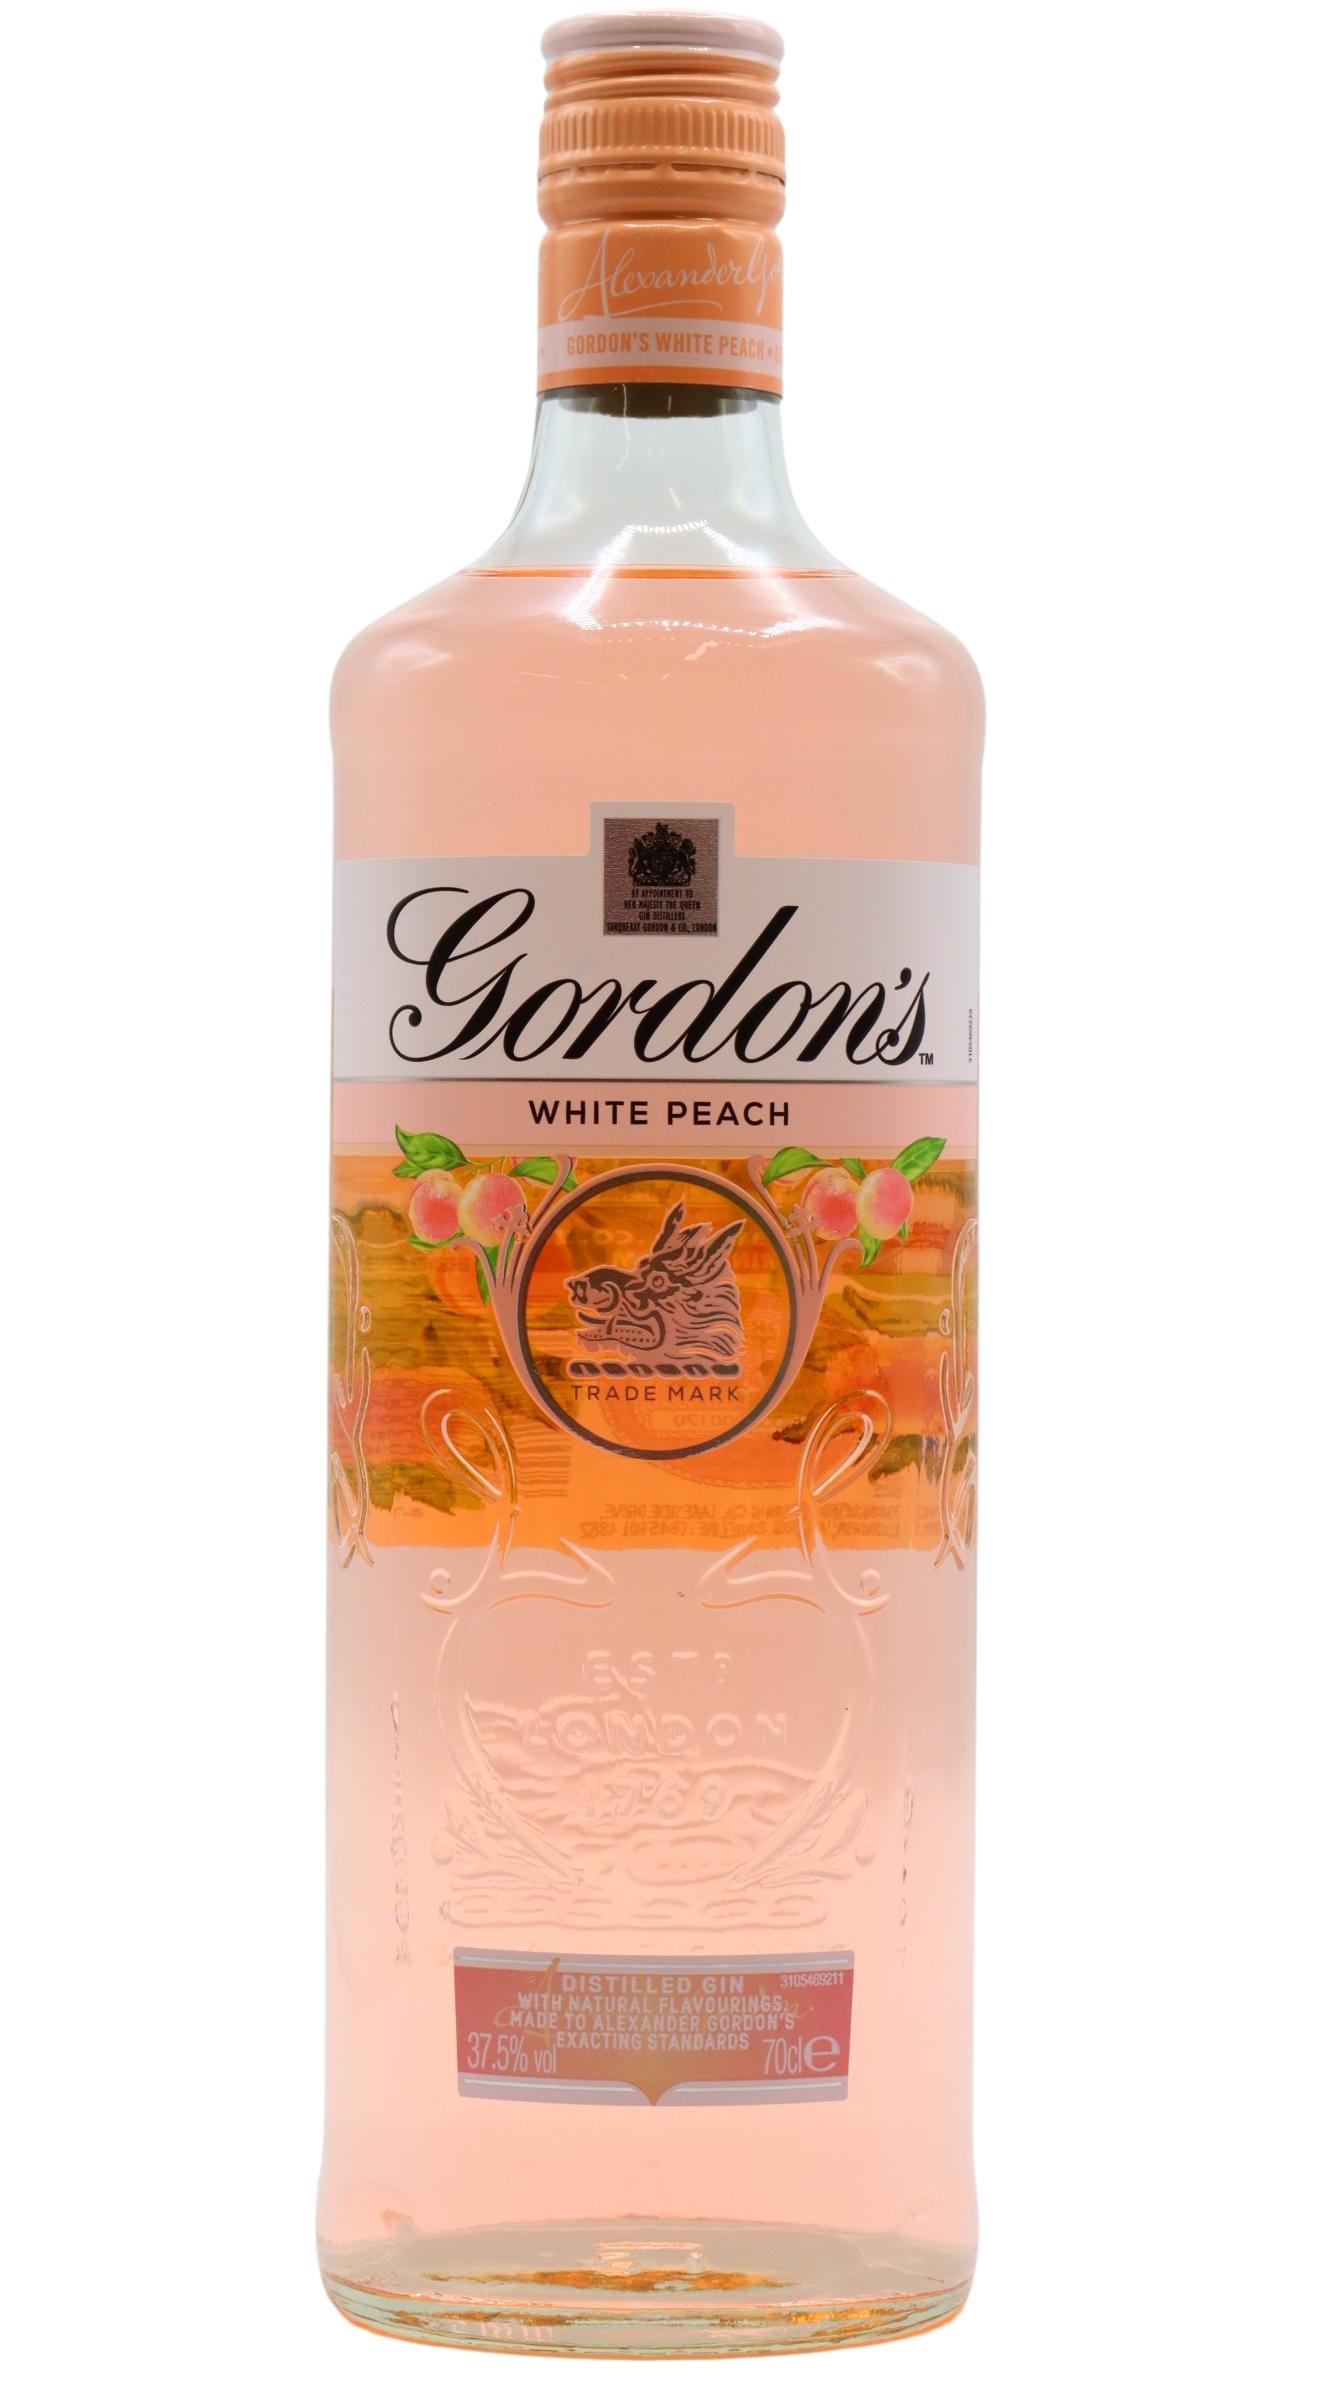 Gordon's Special Dry London Gin, 37.5% vol, 1L